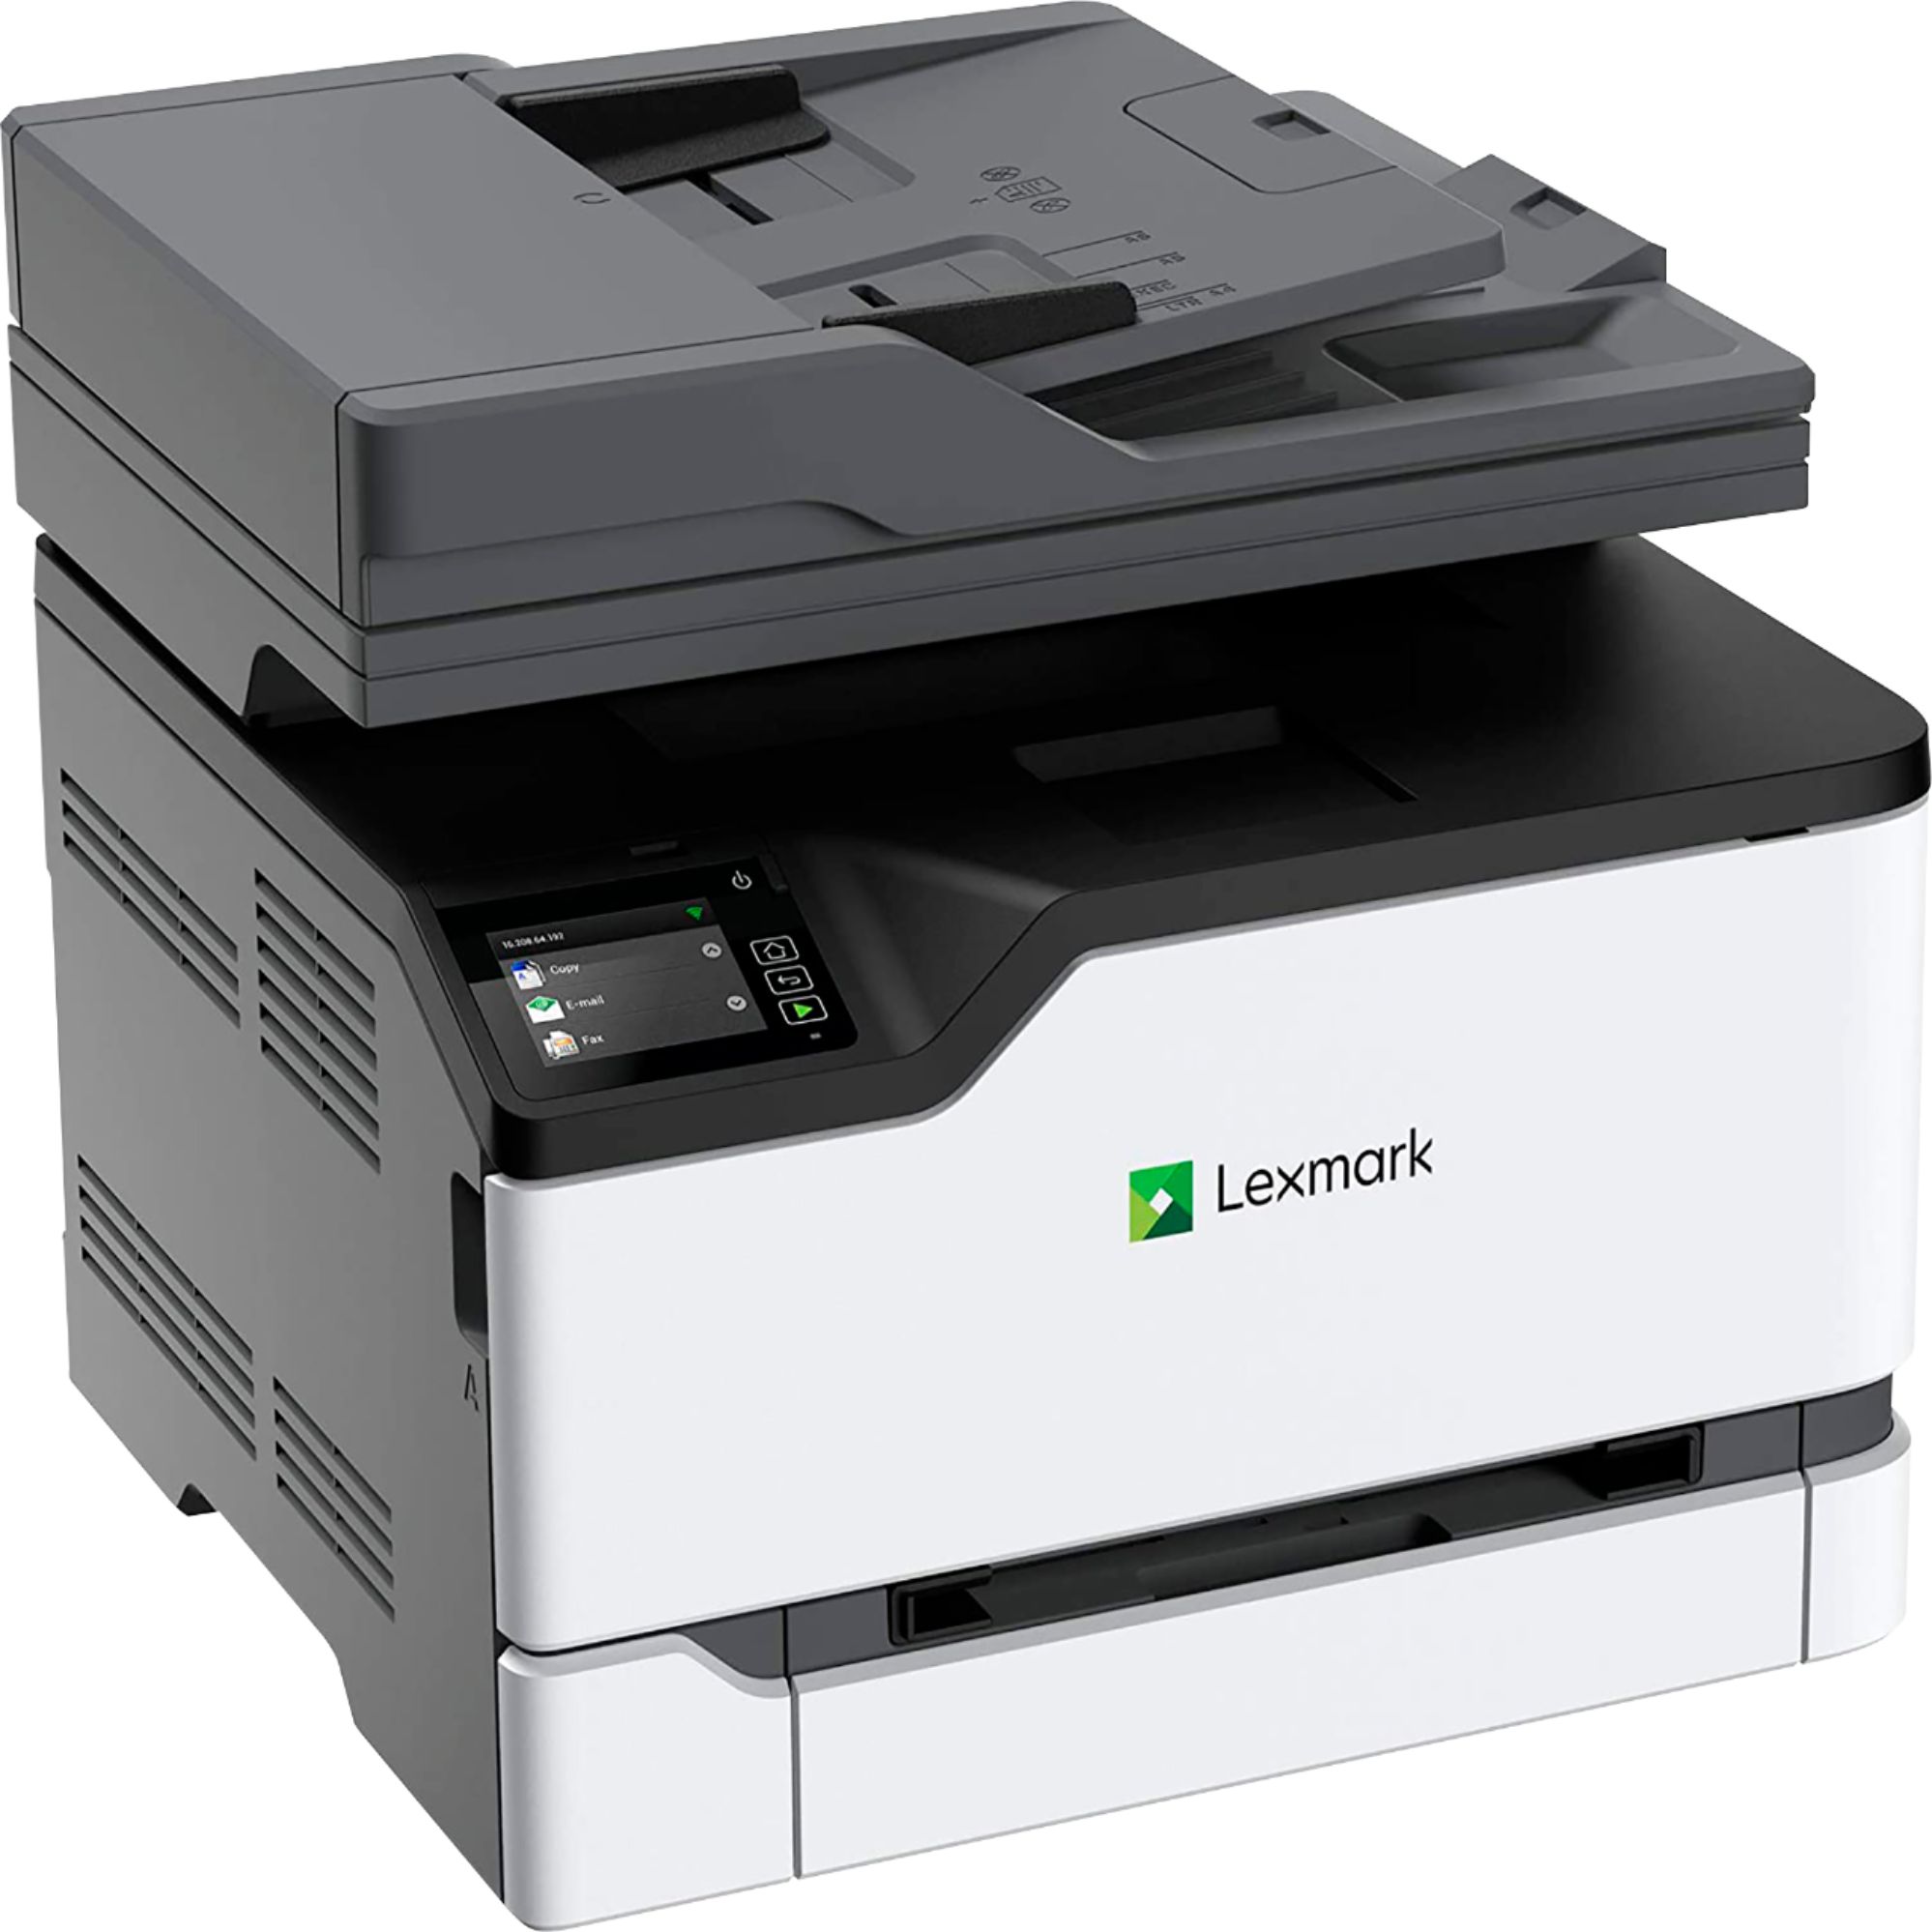 excentrisk feminin Maiden Best Buy: Lexmark MC3224adwe Laser Multifunction Printer Gray and White  40N9050